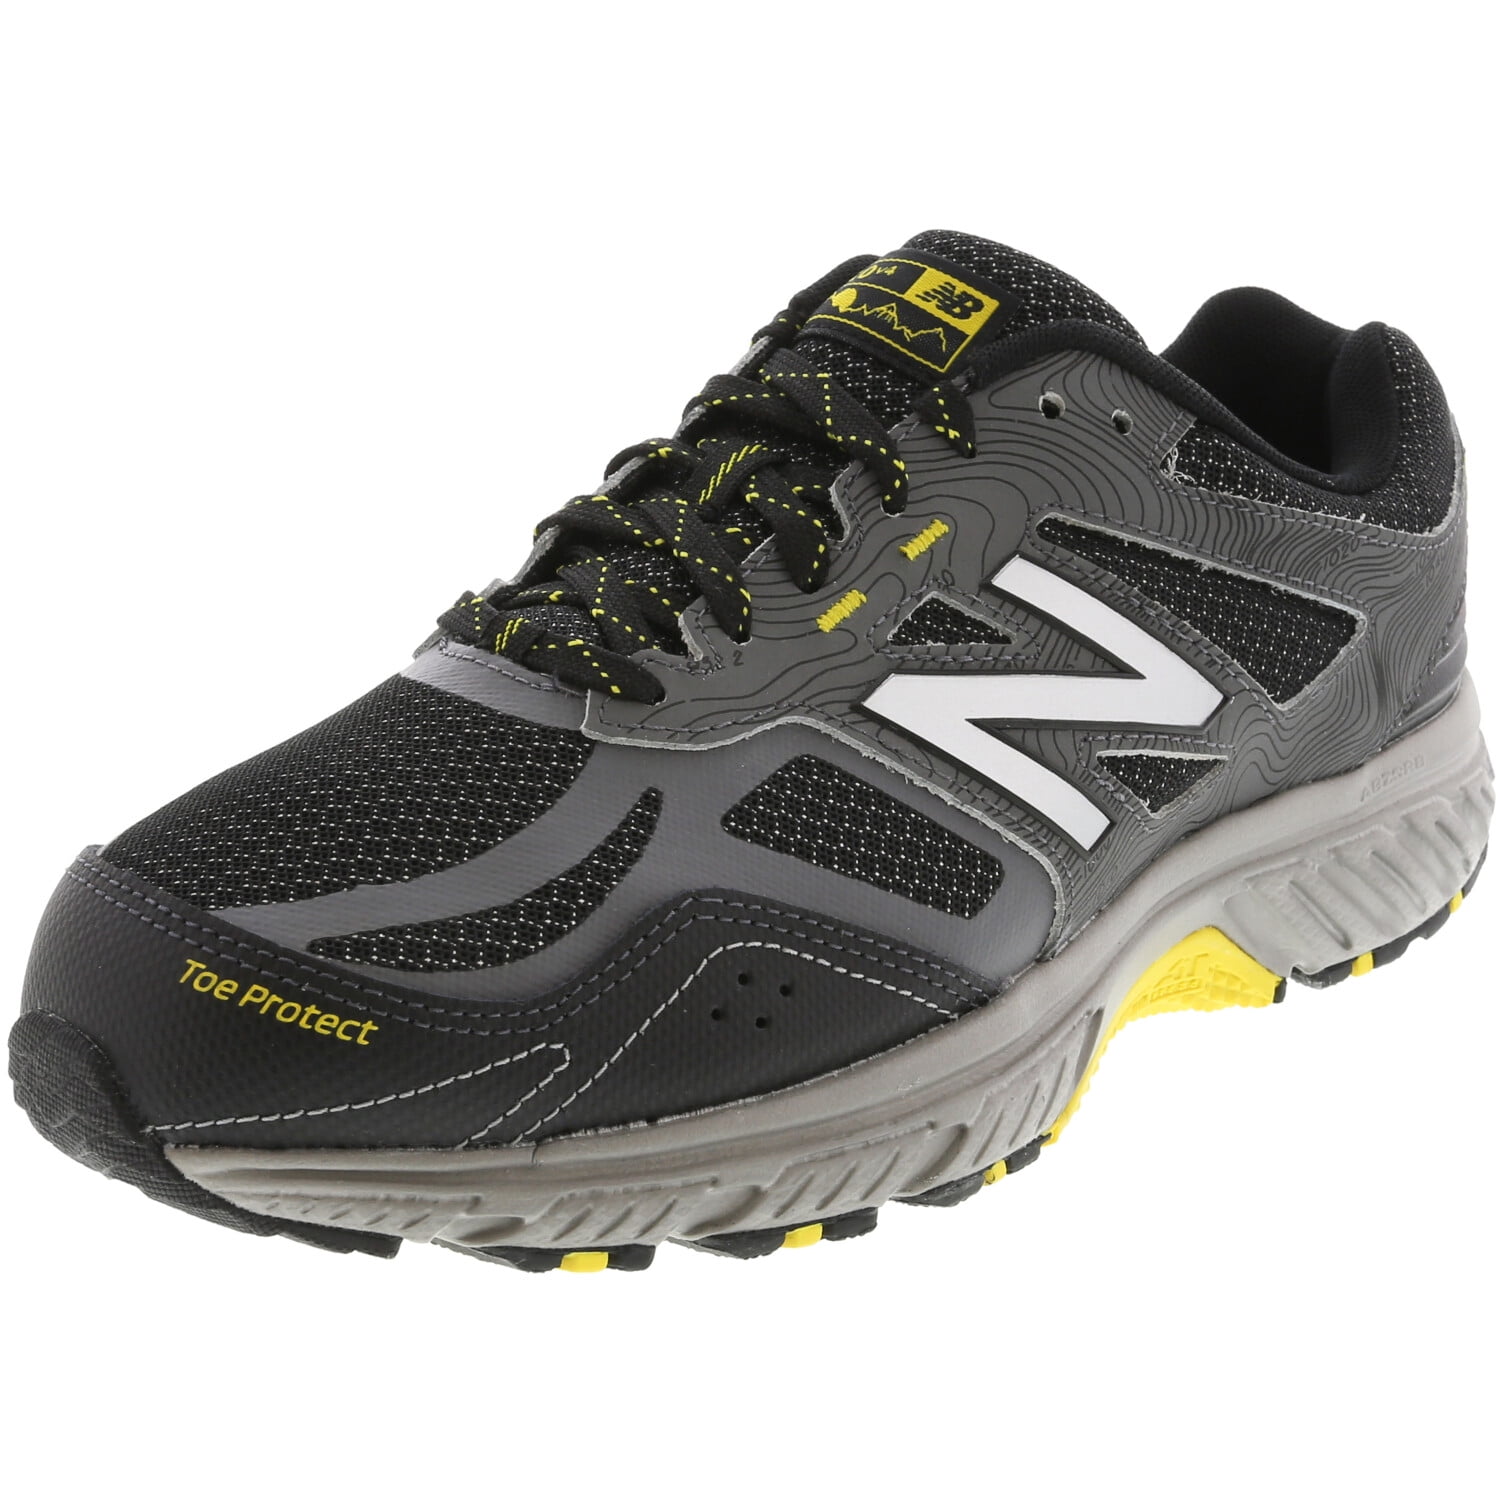 New Balance Mt510 Trail Runner Sneakers - 7.5M - Lc4 - Walmart.com